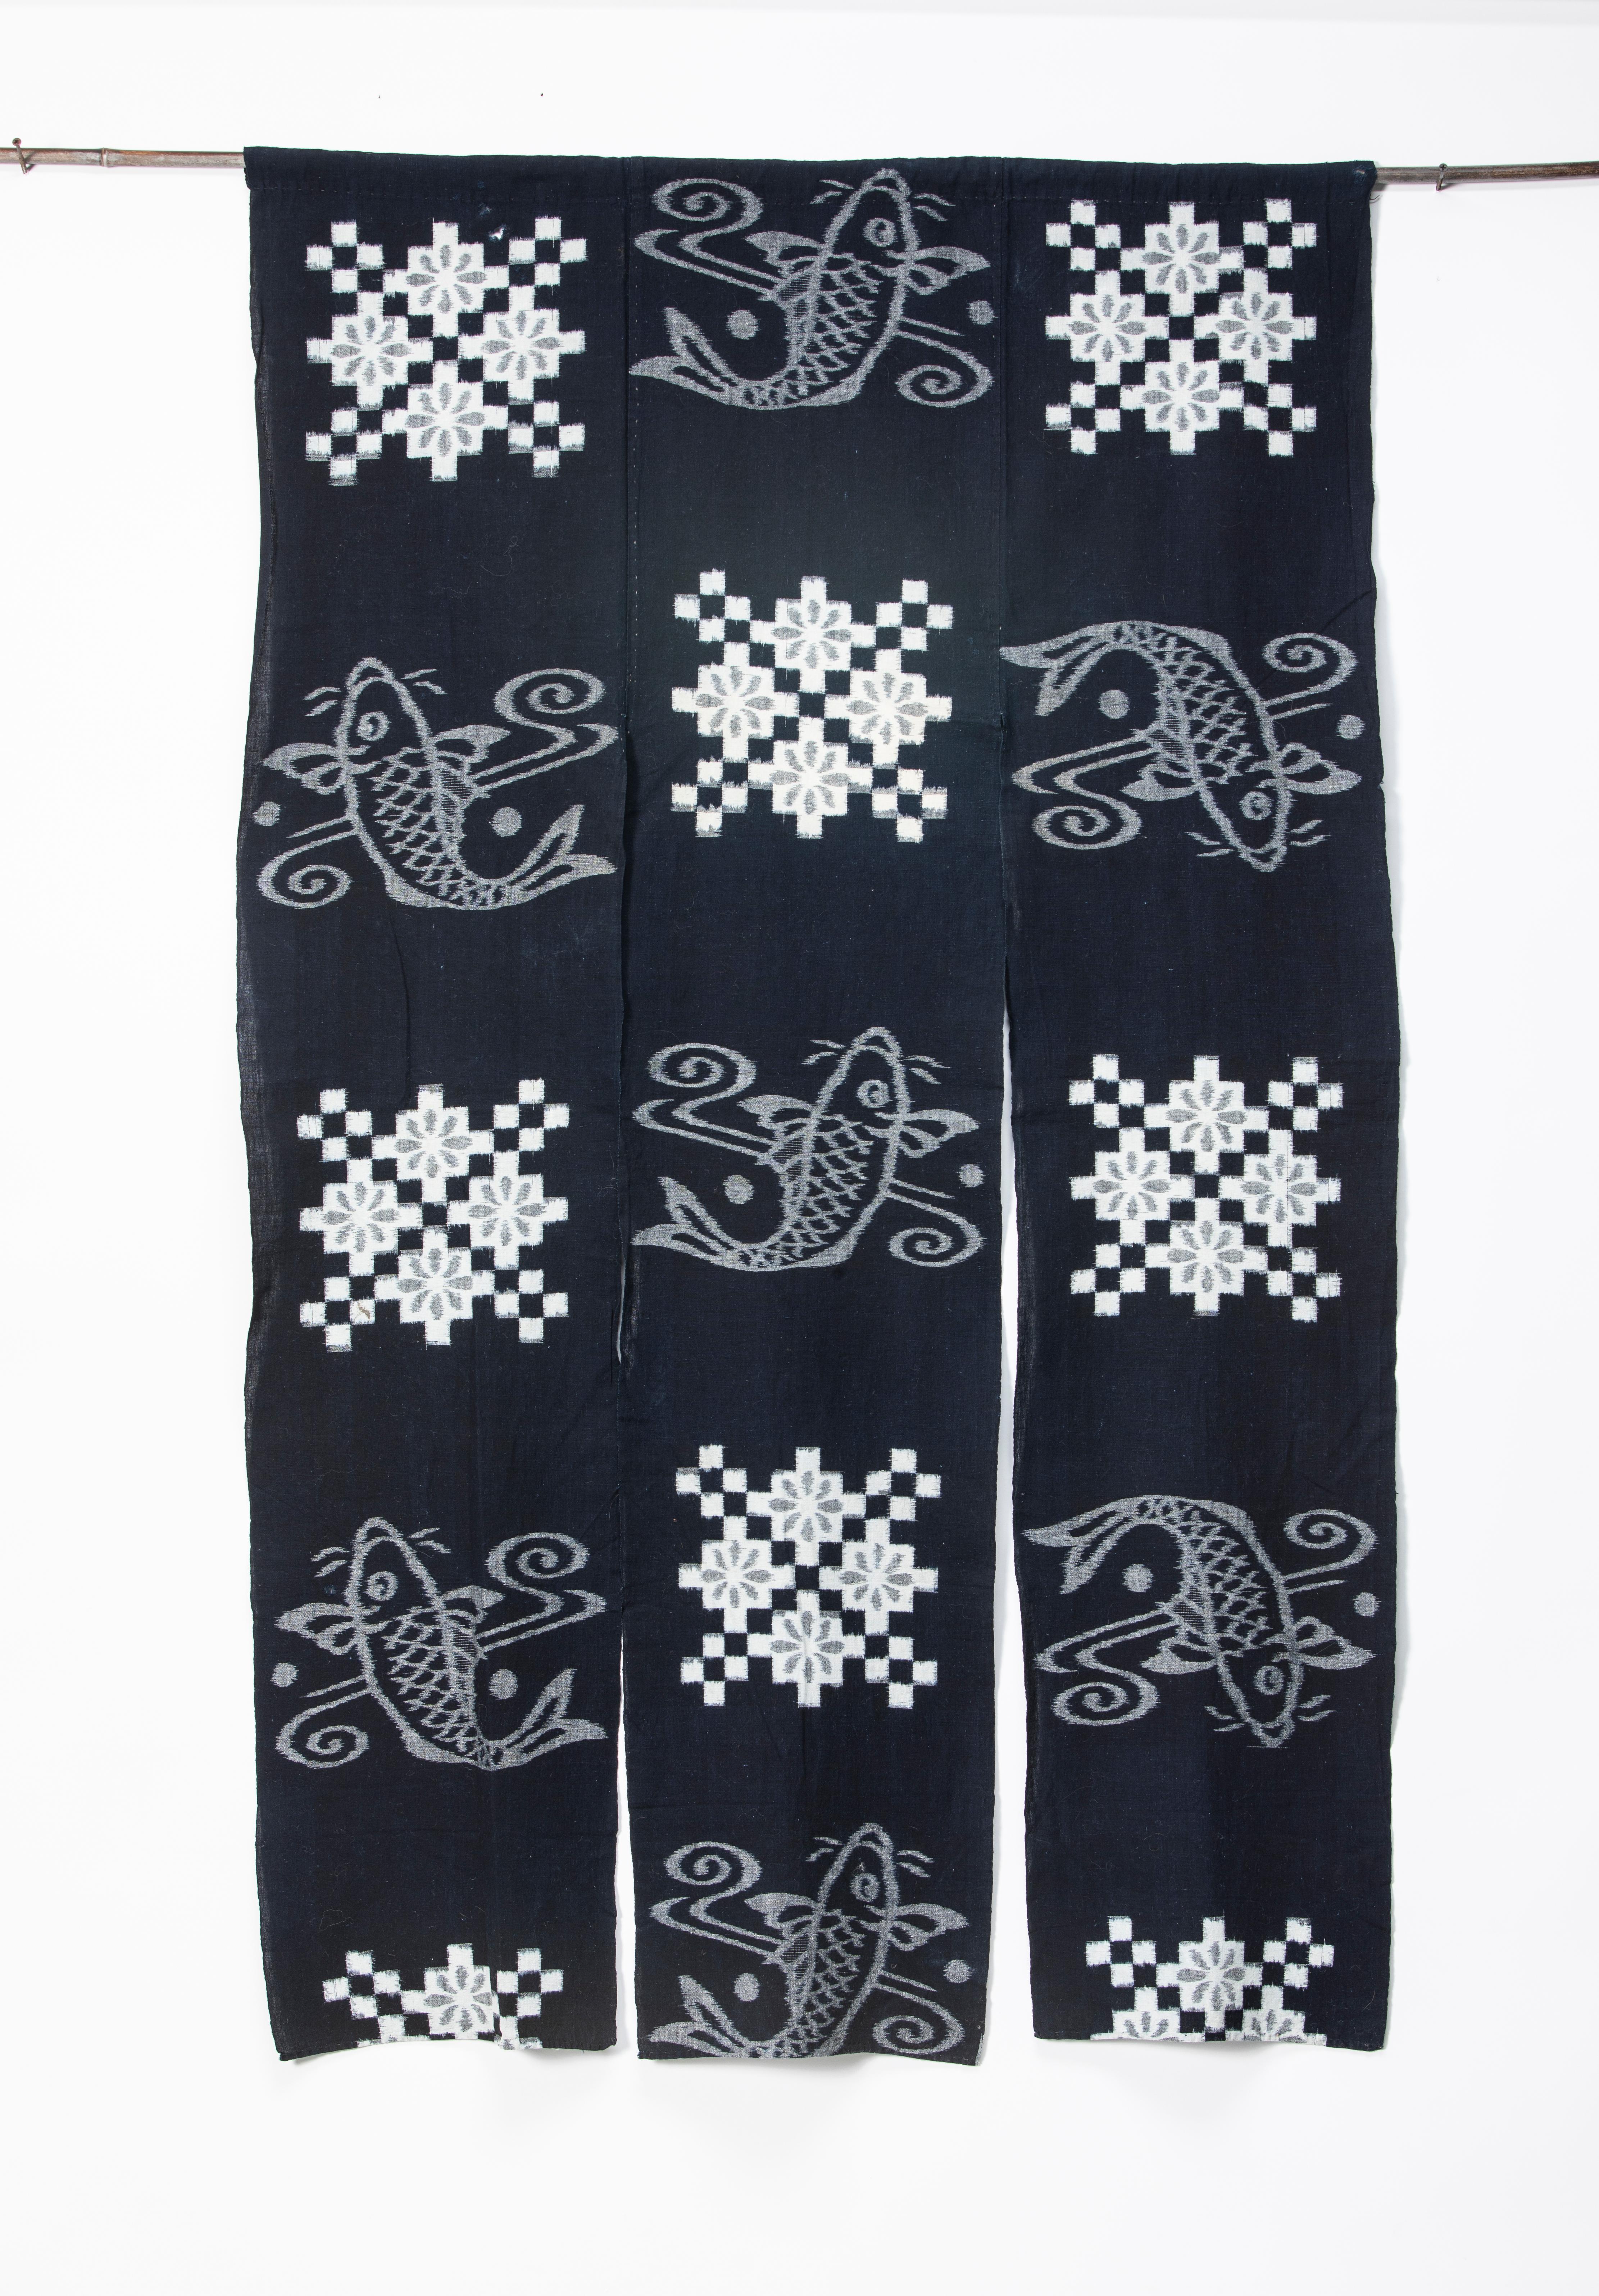 Dyed Indigo E-Gasuri Geometric and Koi Fish Futon Cover For Sale